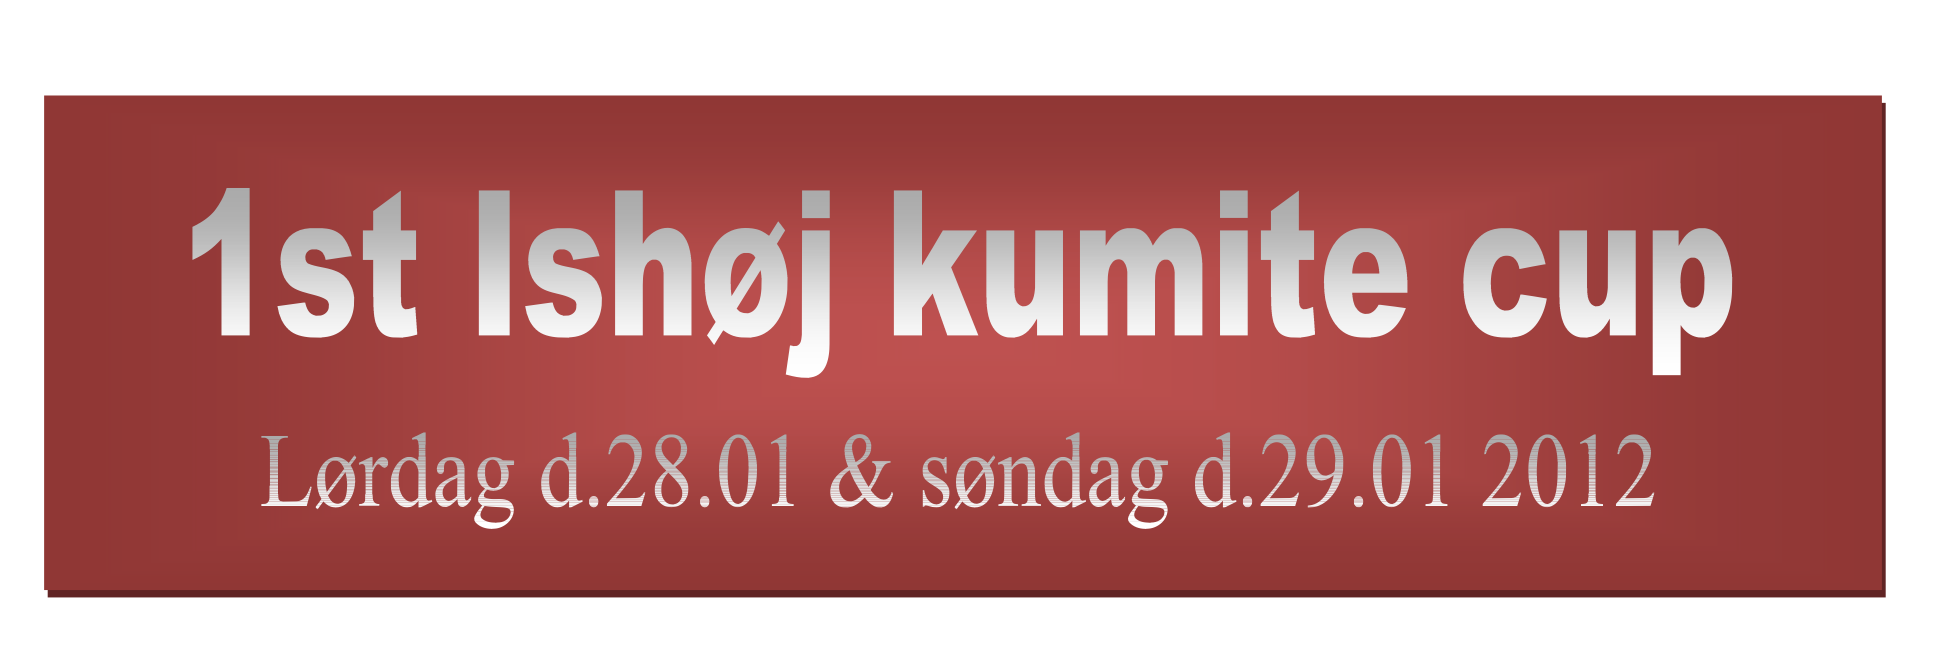 Ishøj kumite cup.  28. – 29. Januar 2012